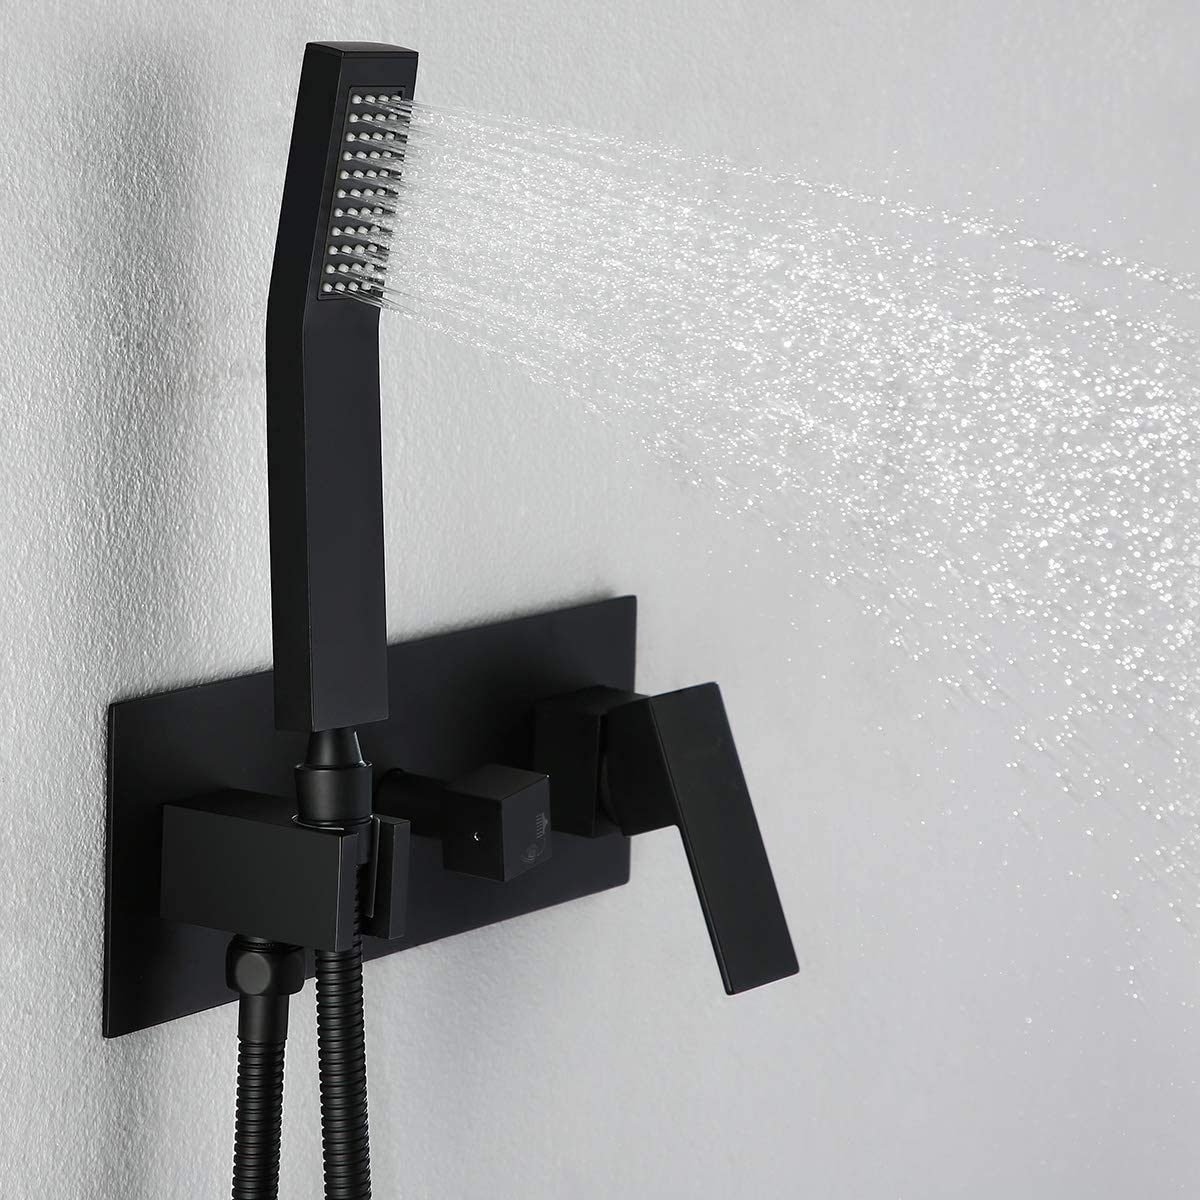 1-spray 10 in. High PressureDual Shower Head and Handheld Shower Head in Matte Black - Alipuinc